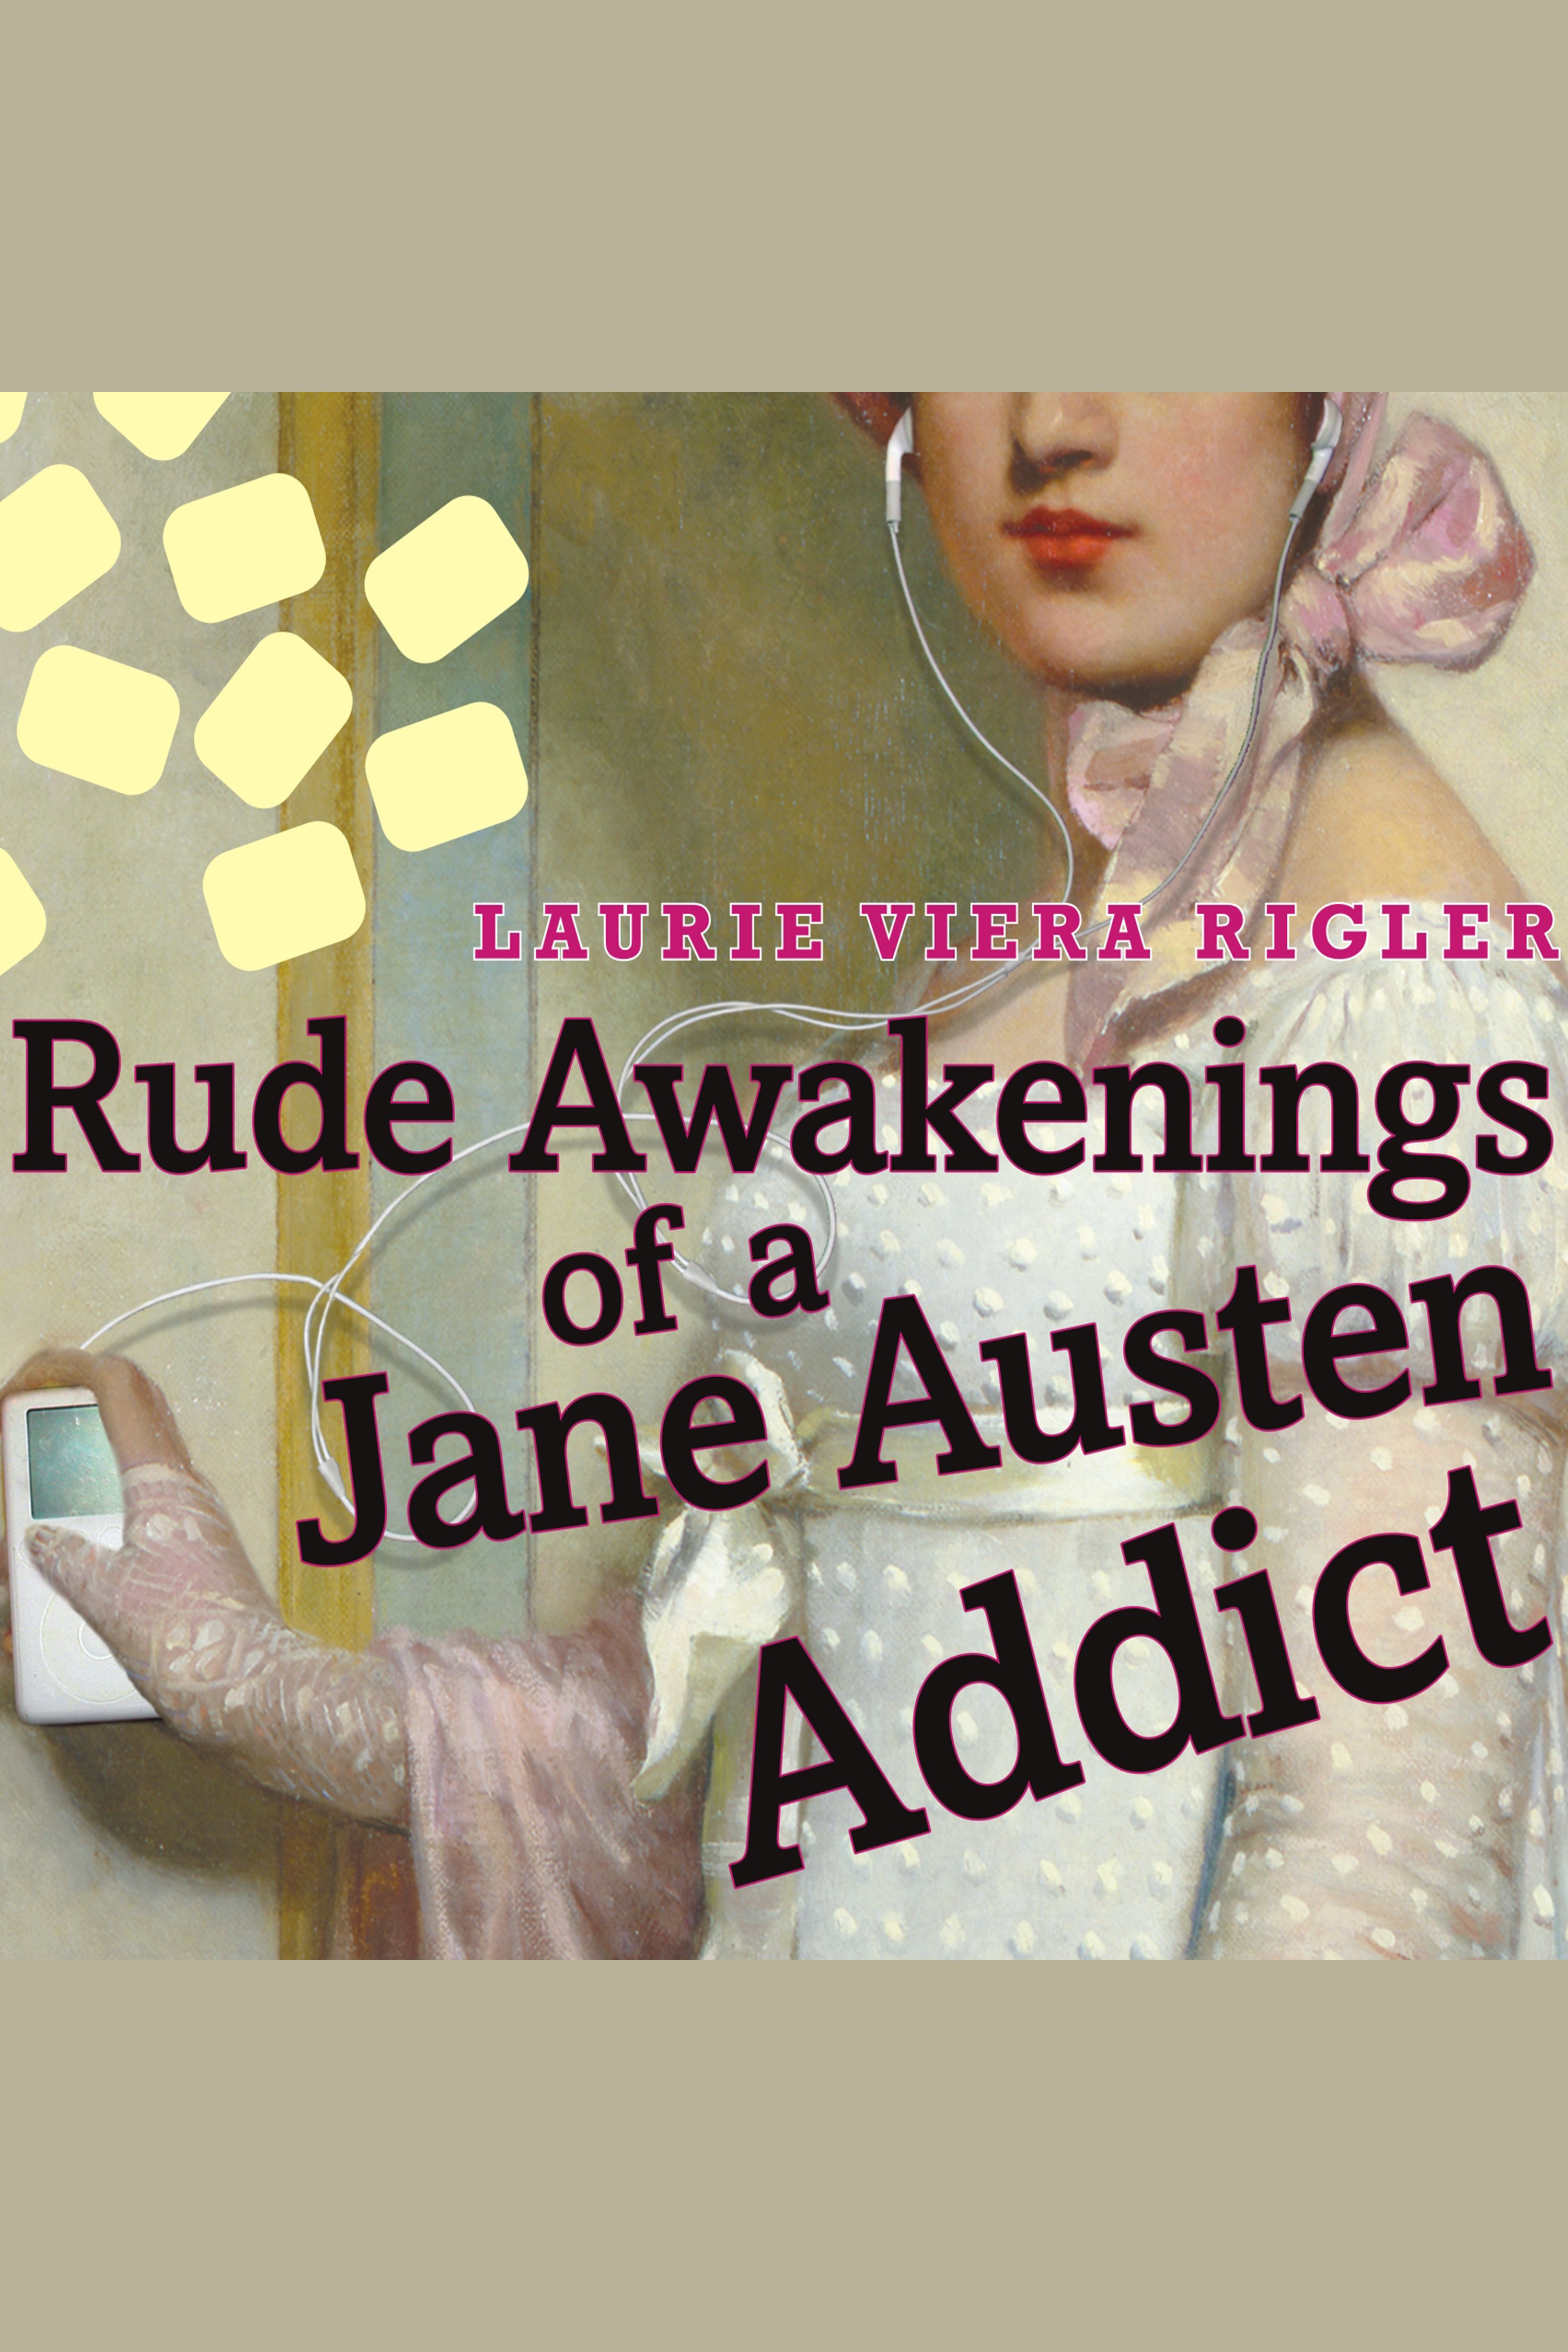 Rude awakenings of a Jane Austen addict cover image